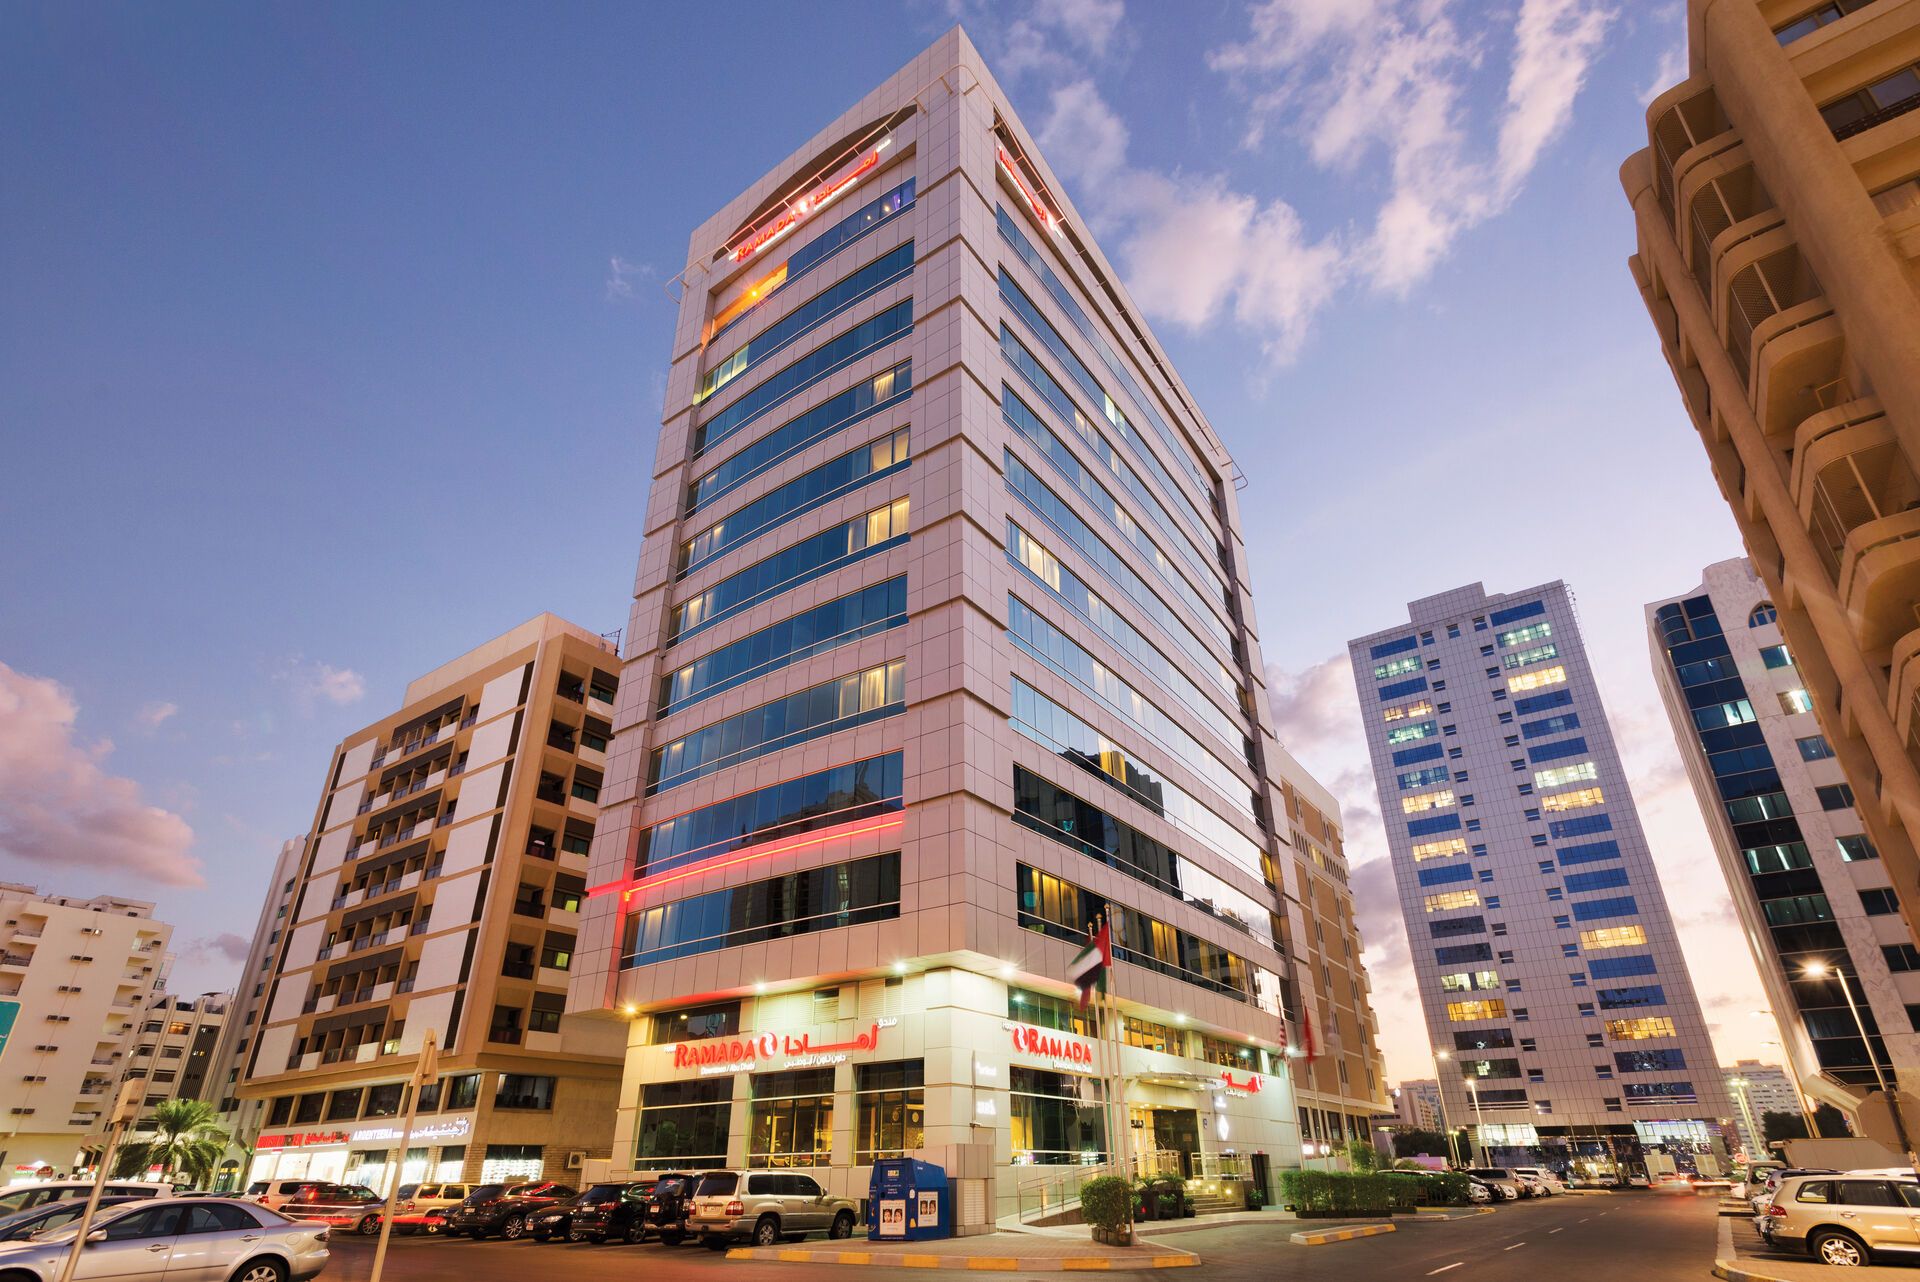 Emirats Arabes Unis - Abu Dhabi - Hotel Ramada Downtown Abu Dhabi 4*